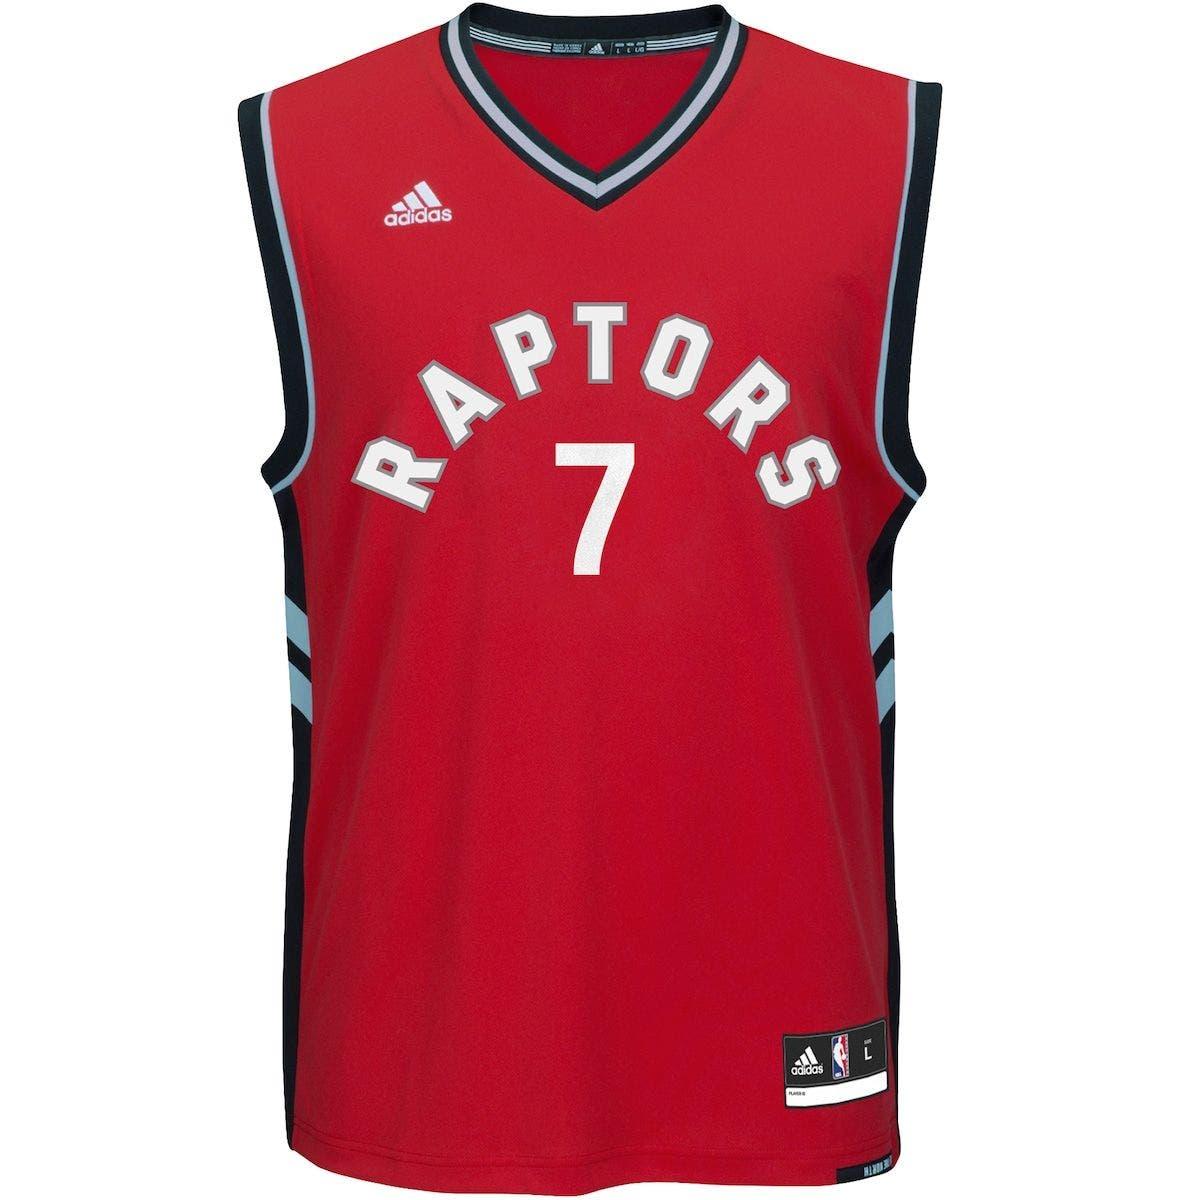 Kyle Lowry Toronto Raptors NBA Jerseys for sale